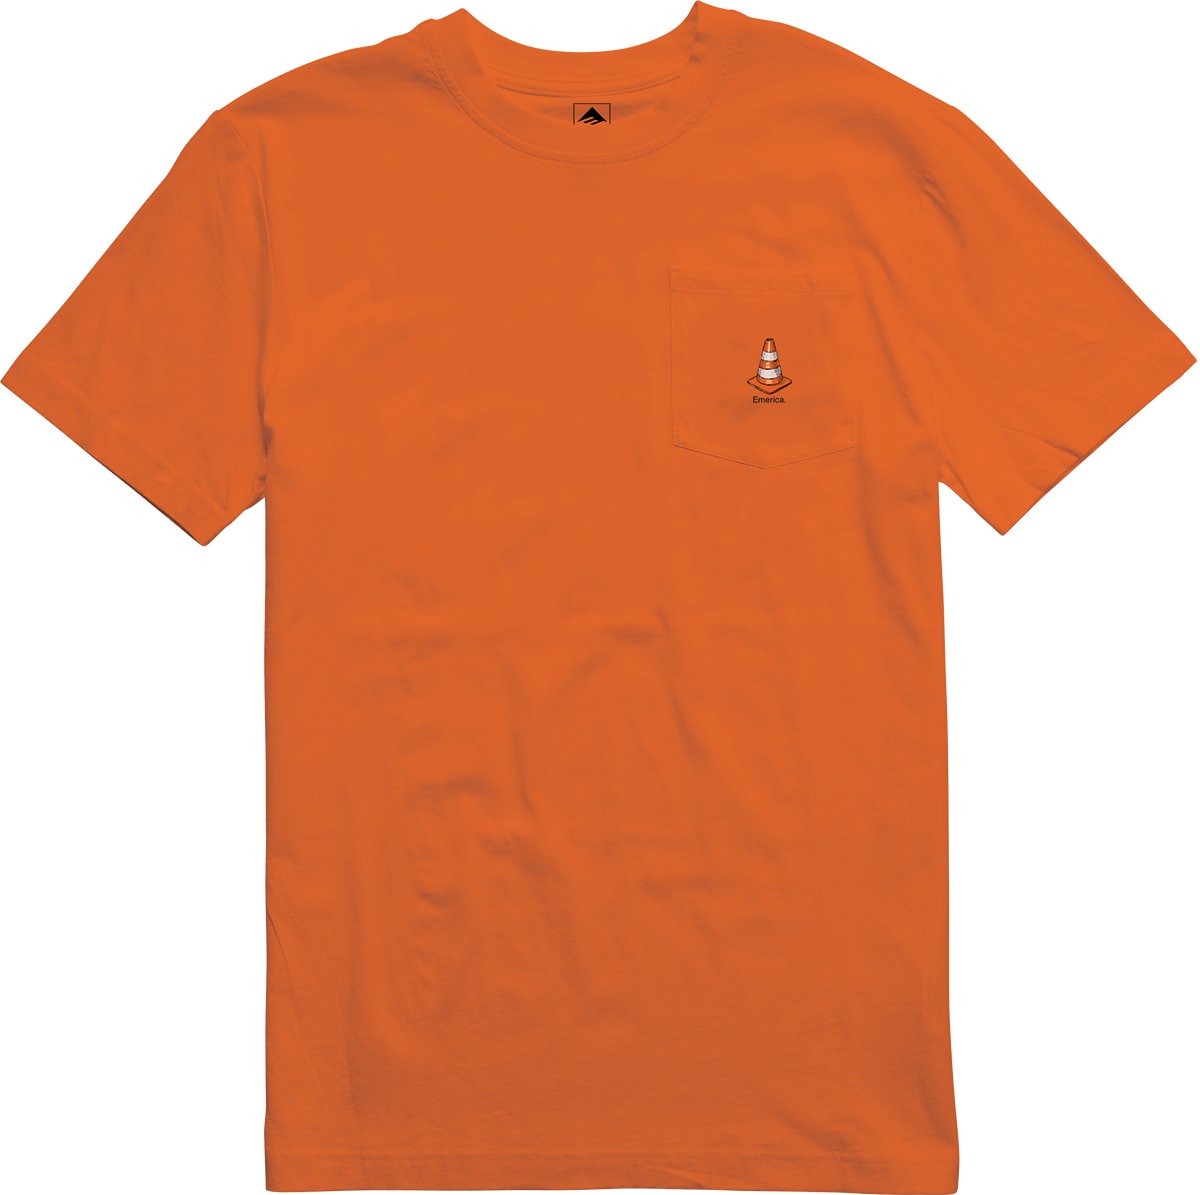 Emerica Mens Streets Pocket Tee Orange T-Shirt